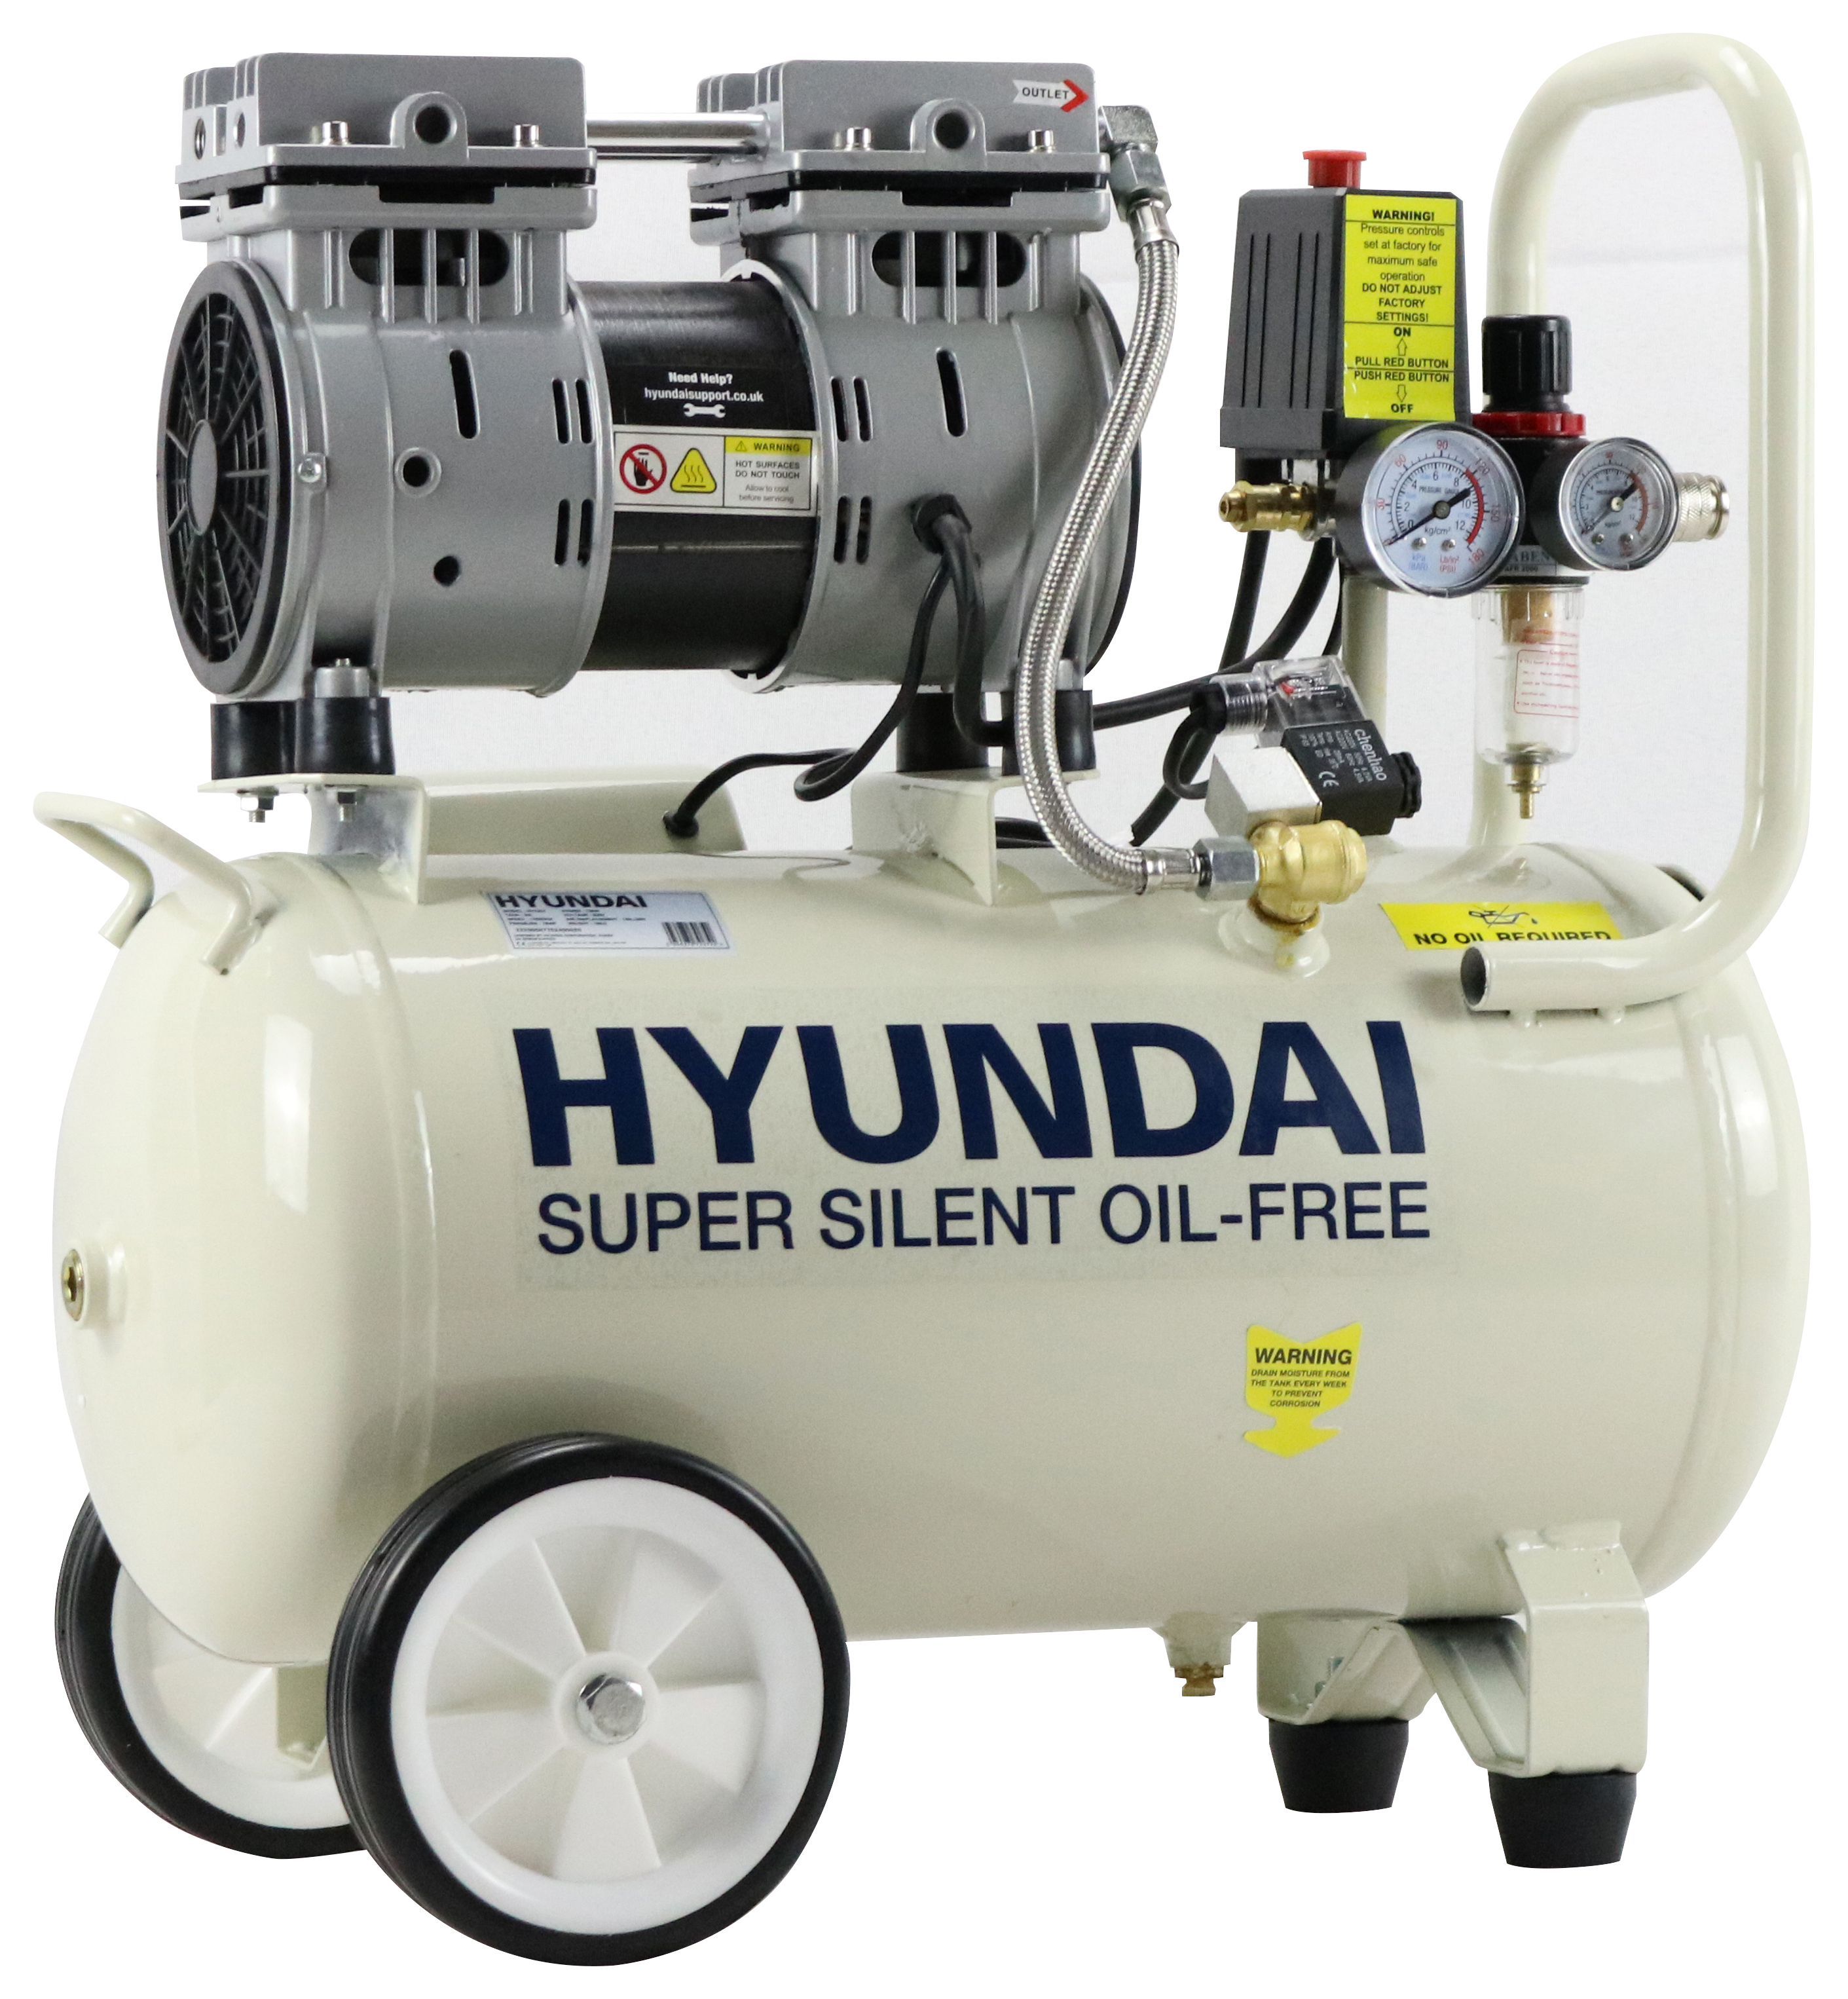 Hyundai HY7524 24L OIL-FREE Low Noise Air Compressor - 750W